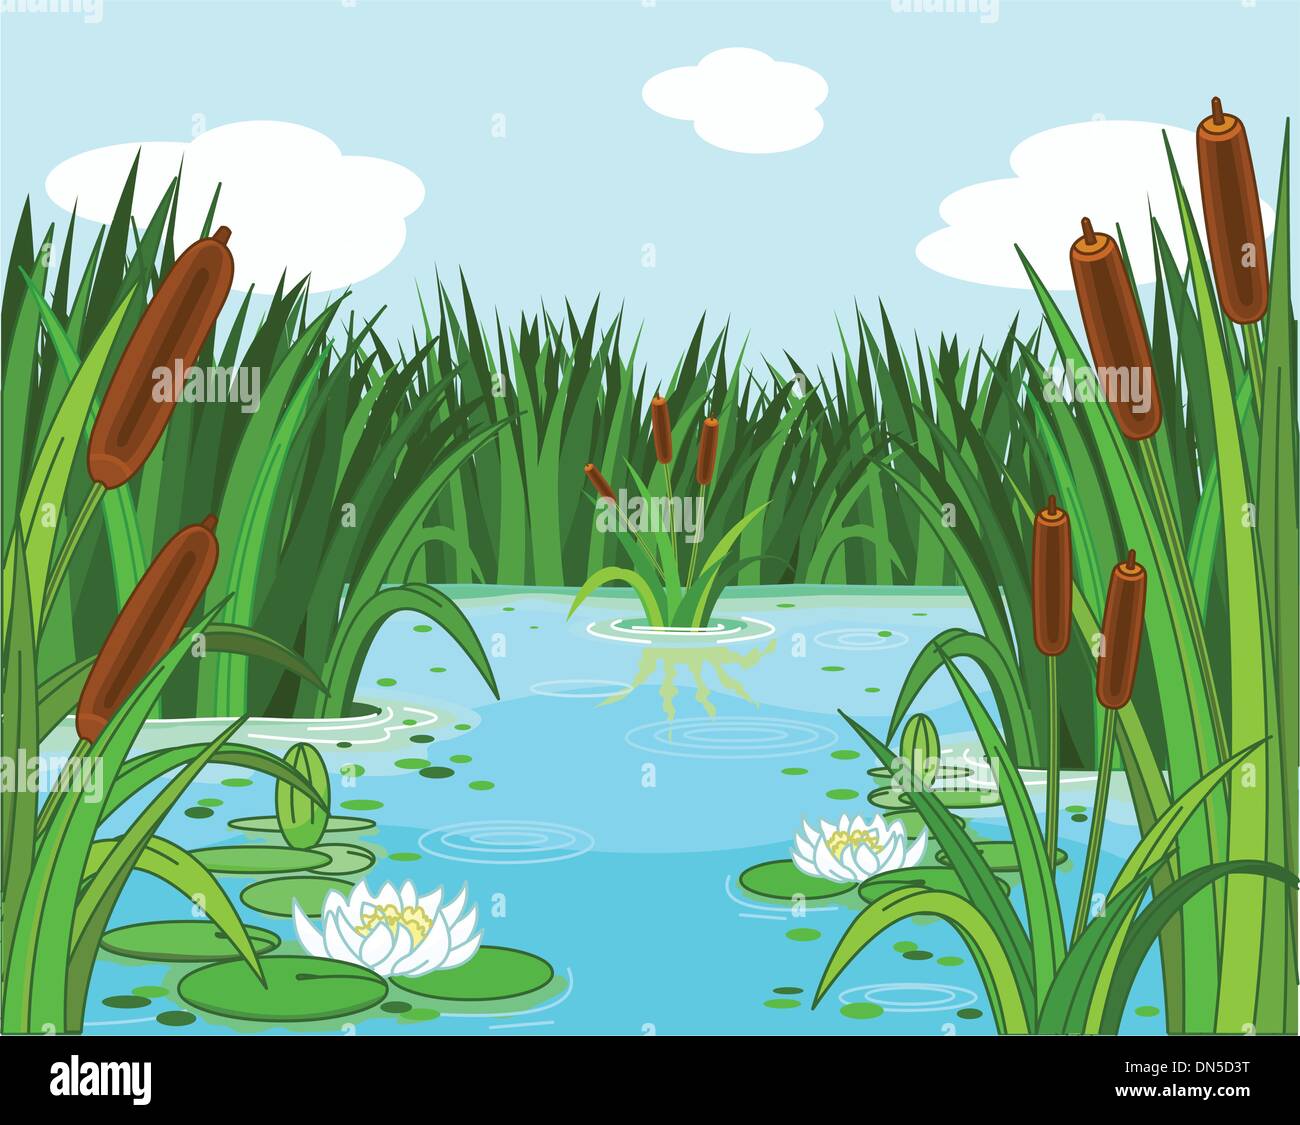 Pond scene Stock Vector Images - Alamy